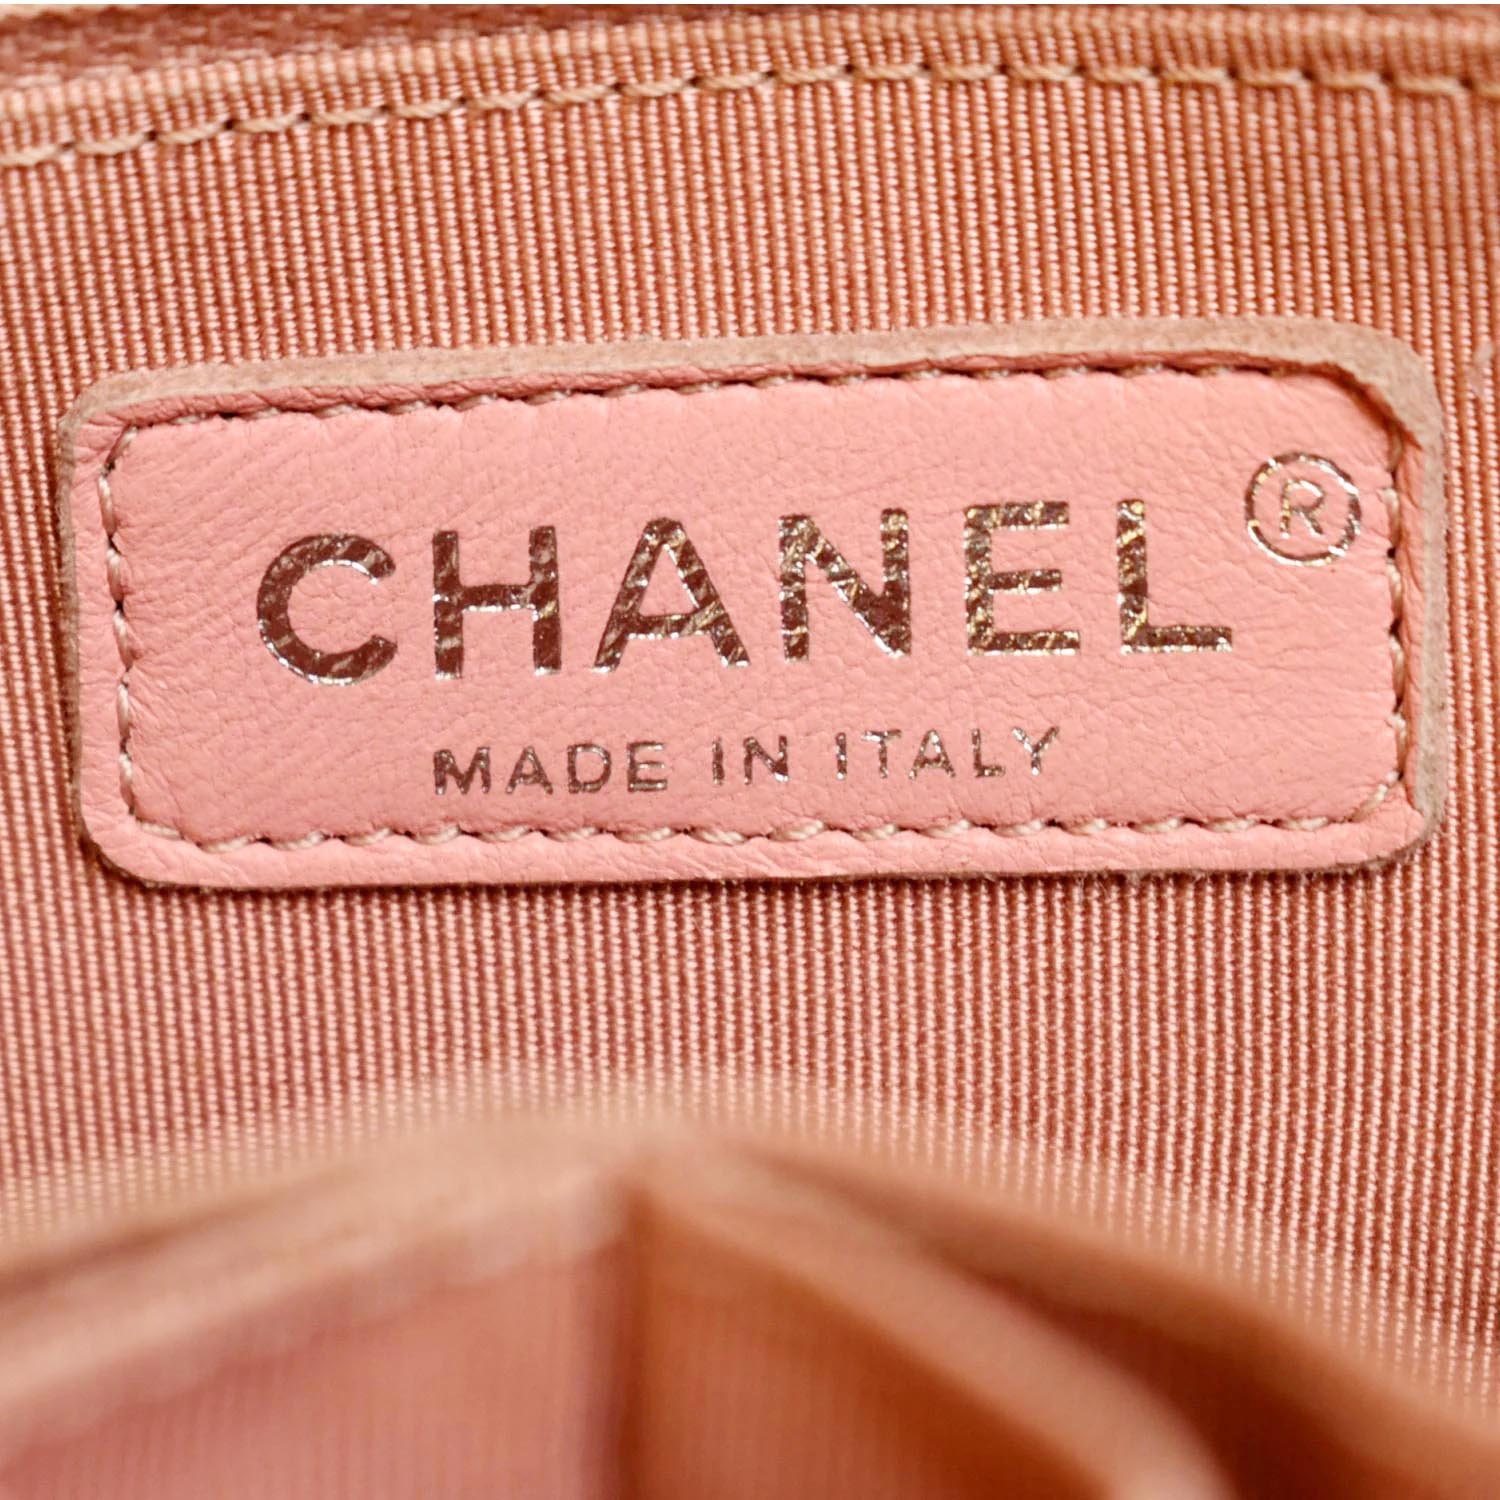 Chanel Gabrielle Medium Quilted Leather Shoulder Bag